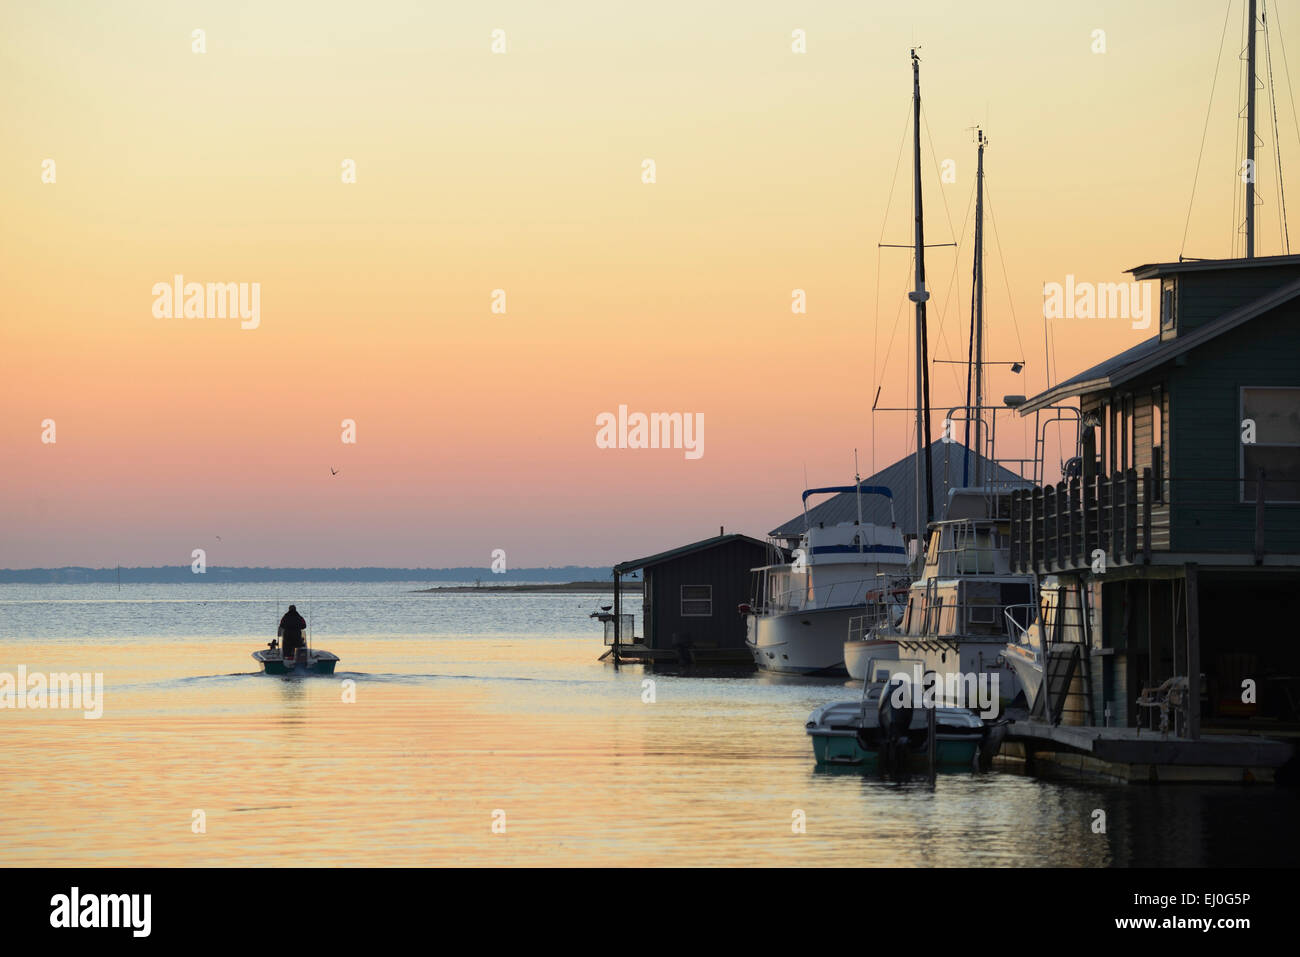 USA, Florida, Franklin County, Apalachicola, dock and boats along the river, Stock Photo